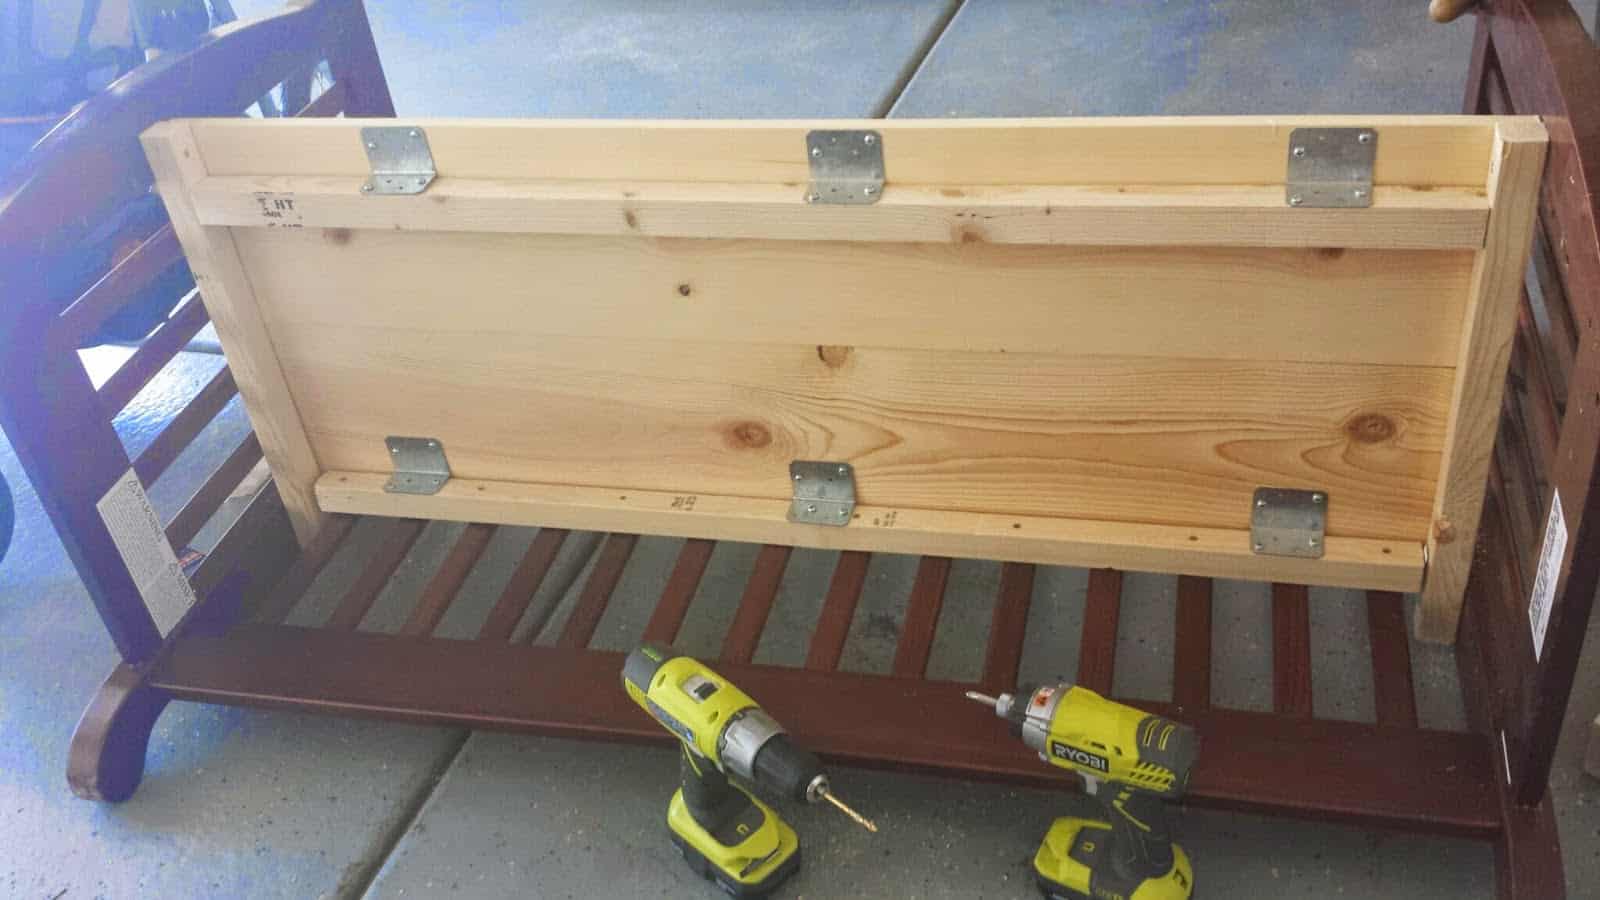 Crib to bench tutorial #DIY #paintedfurniture #repurpose #upcycle - www.countrychicpaint.com/blog